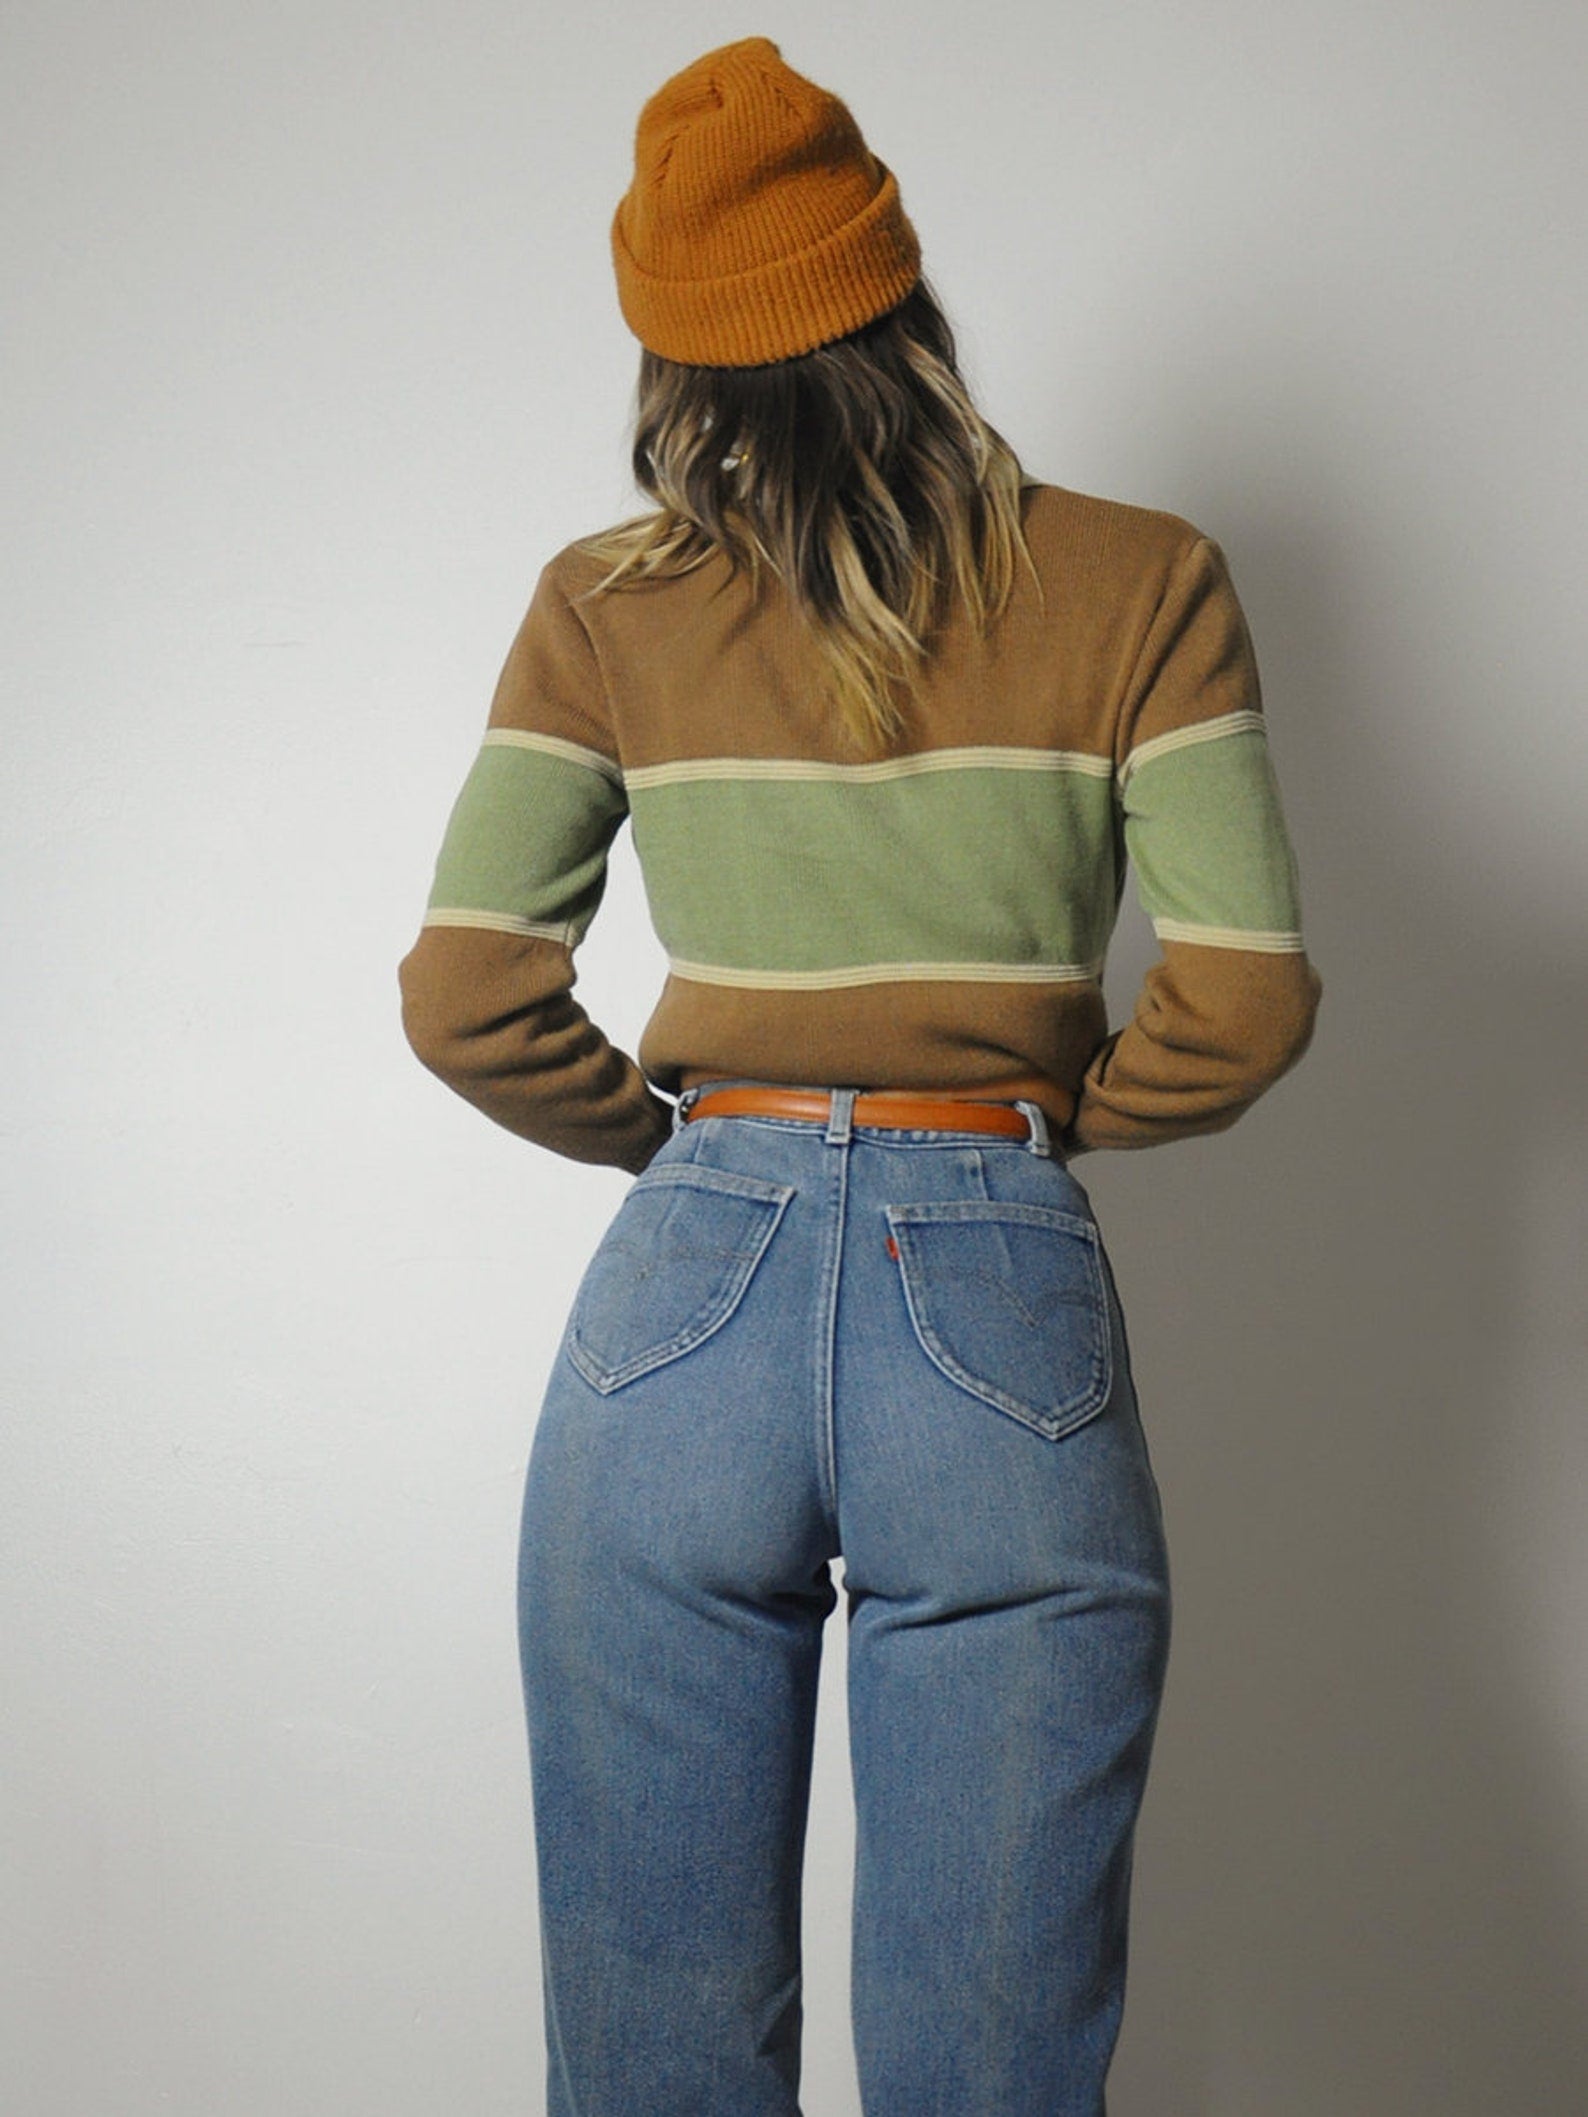 1970's Levi's Orange Tab Jeans 26x29.5